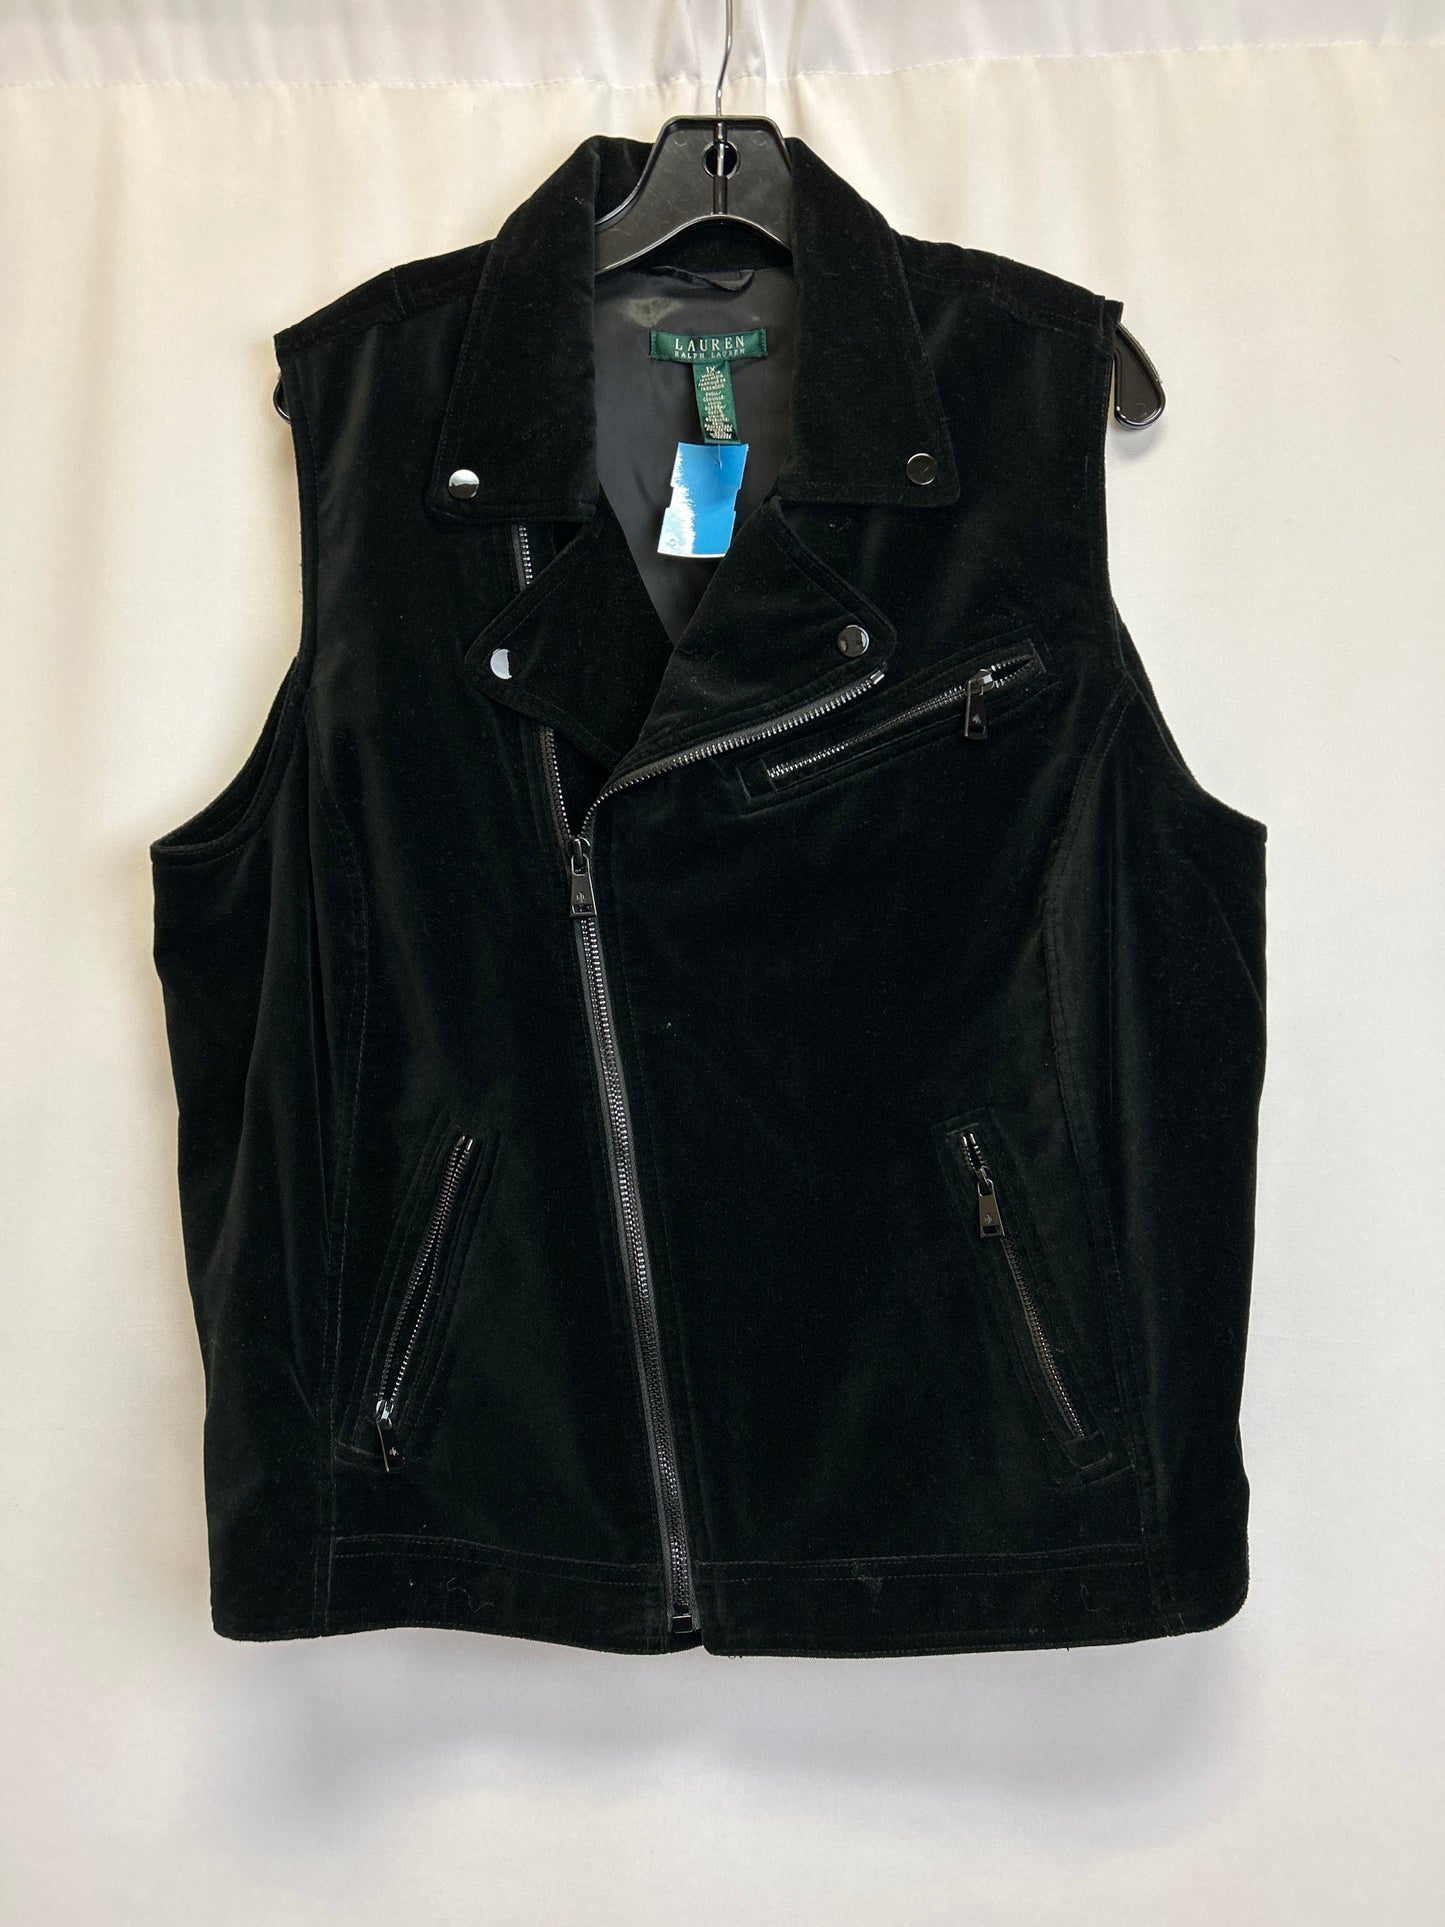 Vest Other By Lauren By Ralph Lauren  Size: 1x